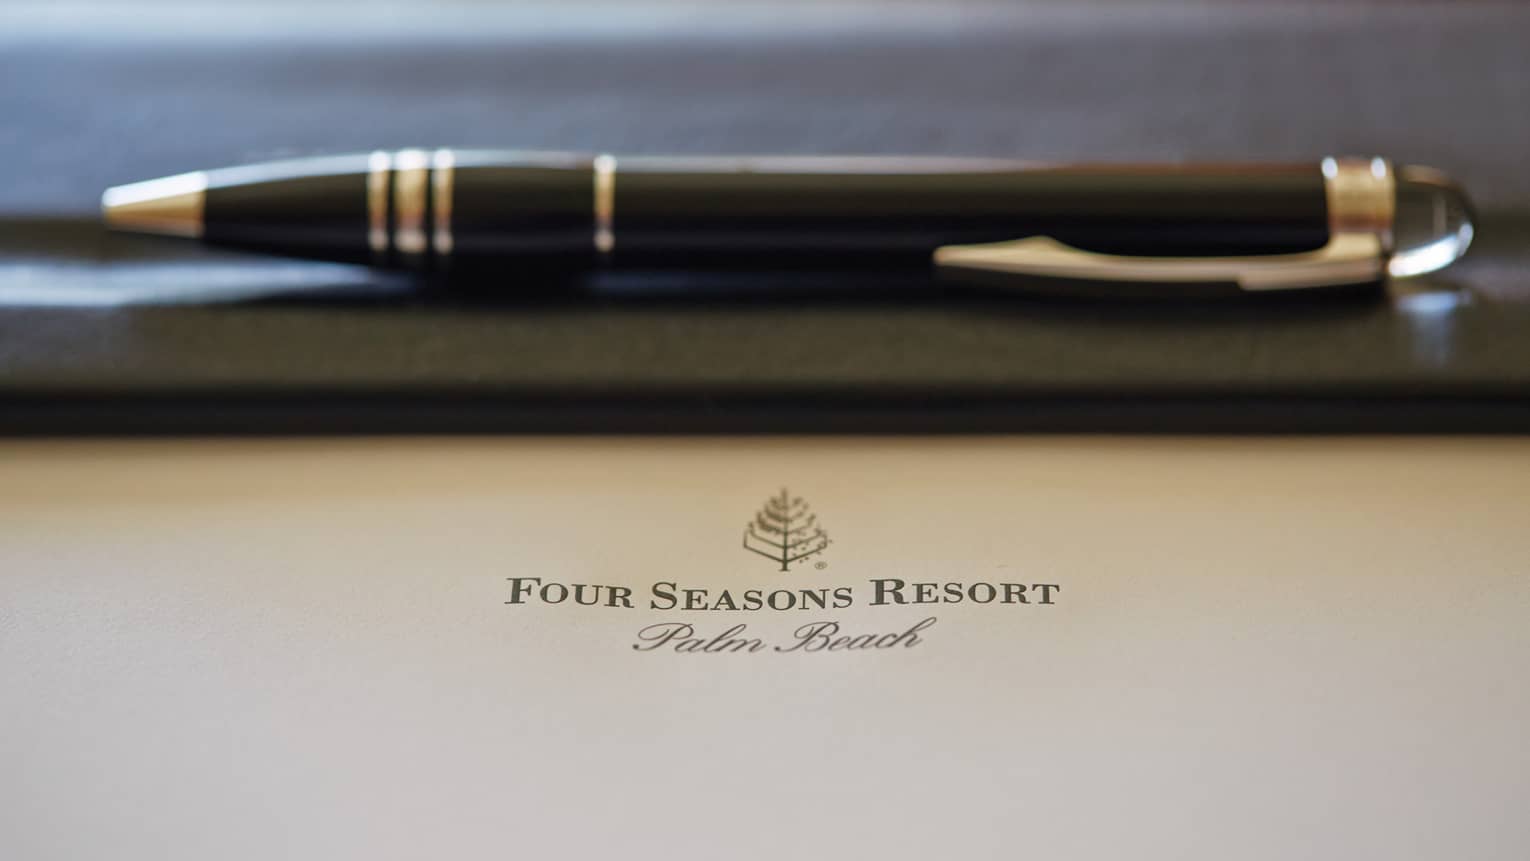 Four Seasons Resort Palm Beach notepad and pen